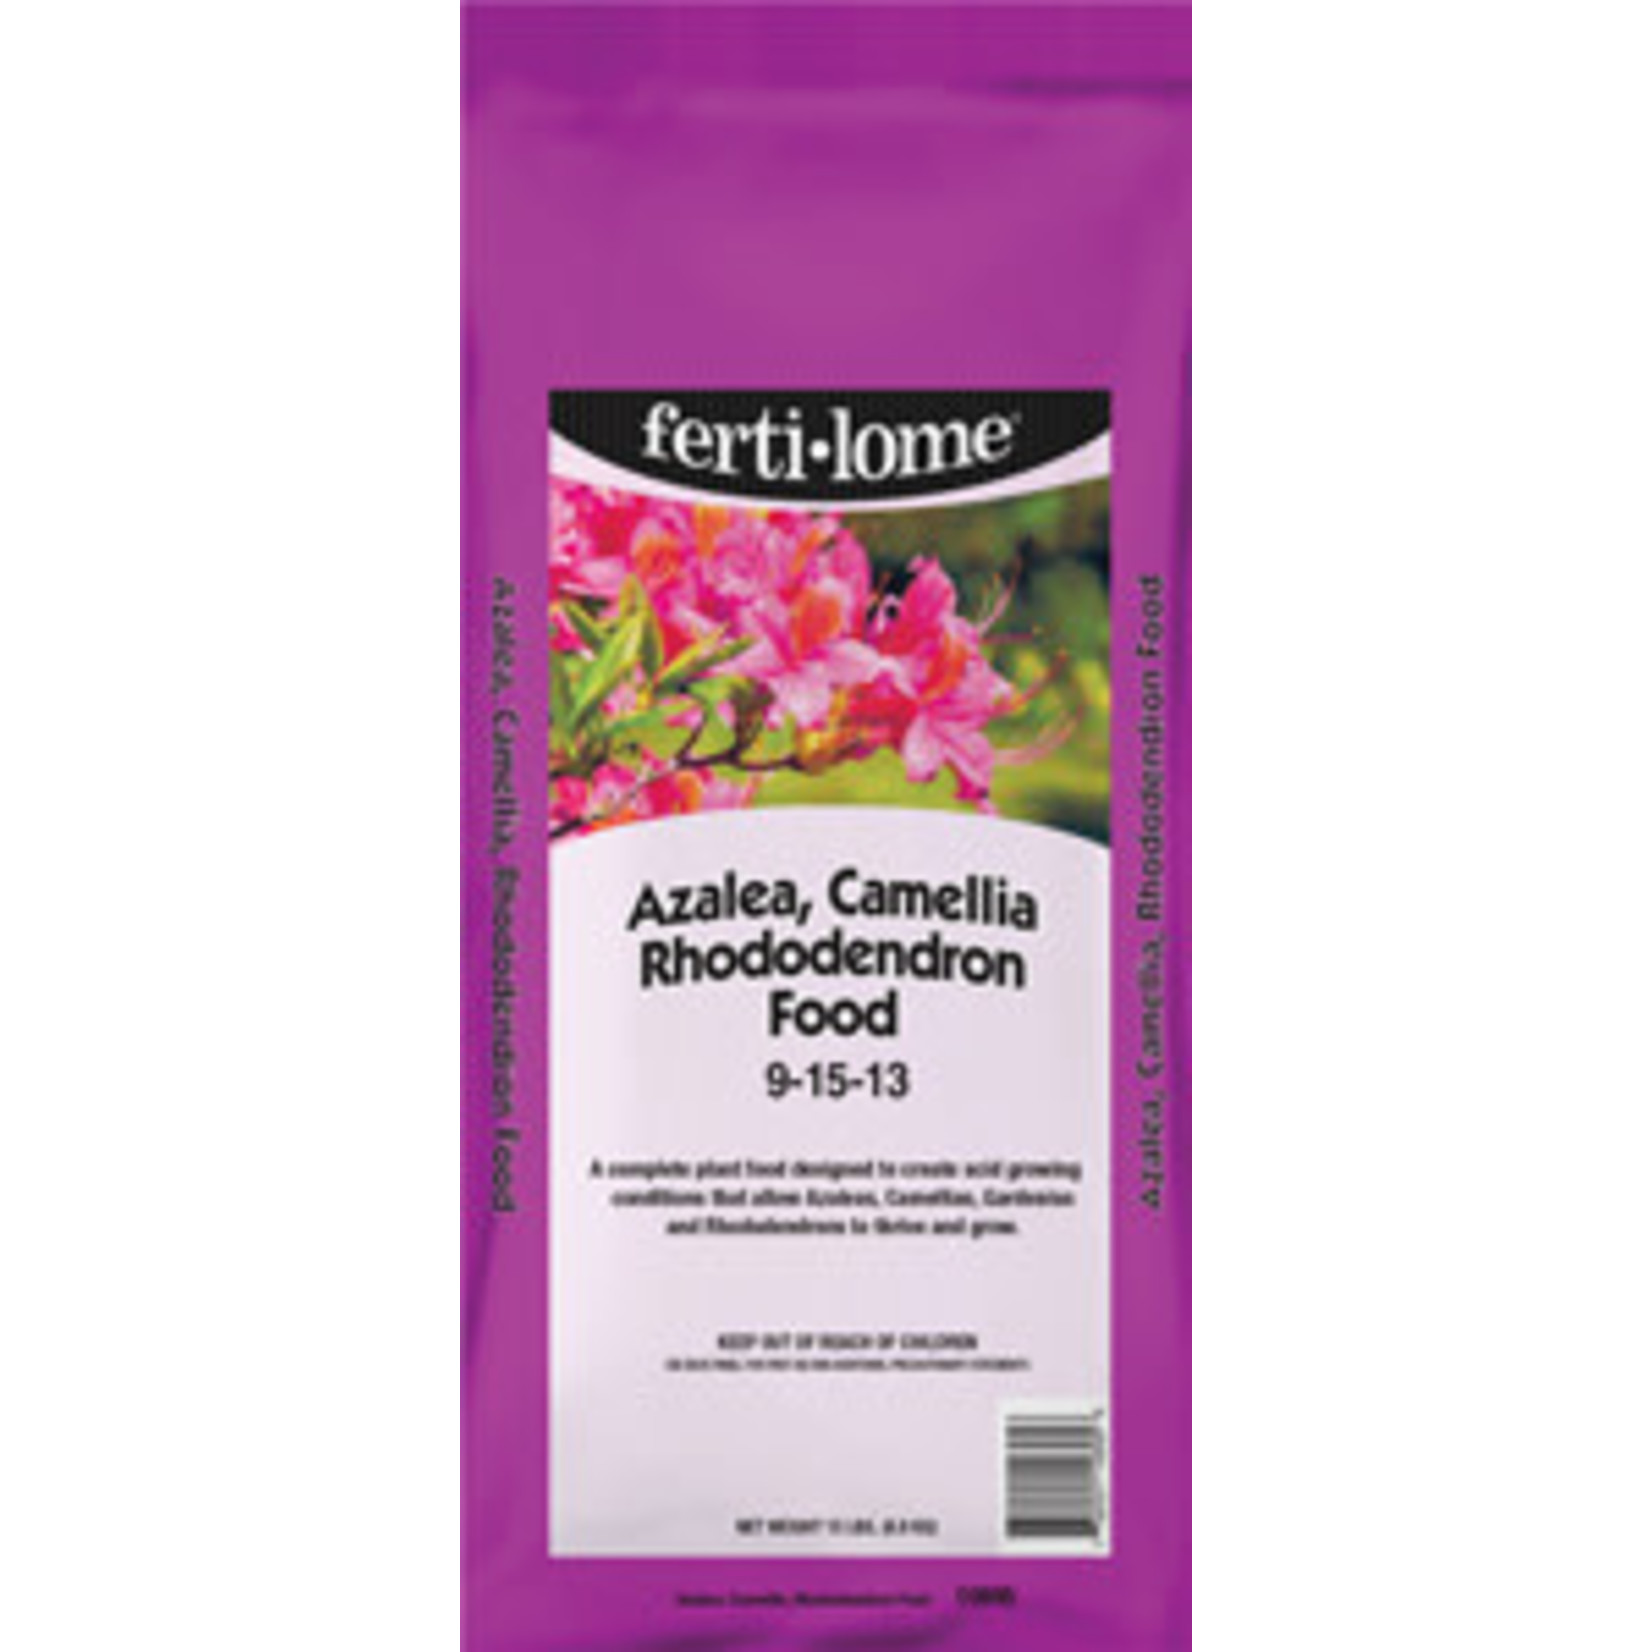 Ferti-lome Fertilome Azalea, Camellia, Rhododendron Food 9-15-13 4LB